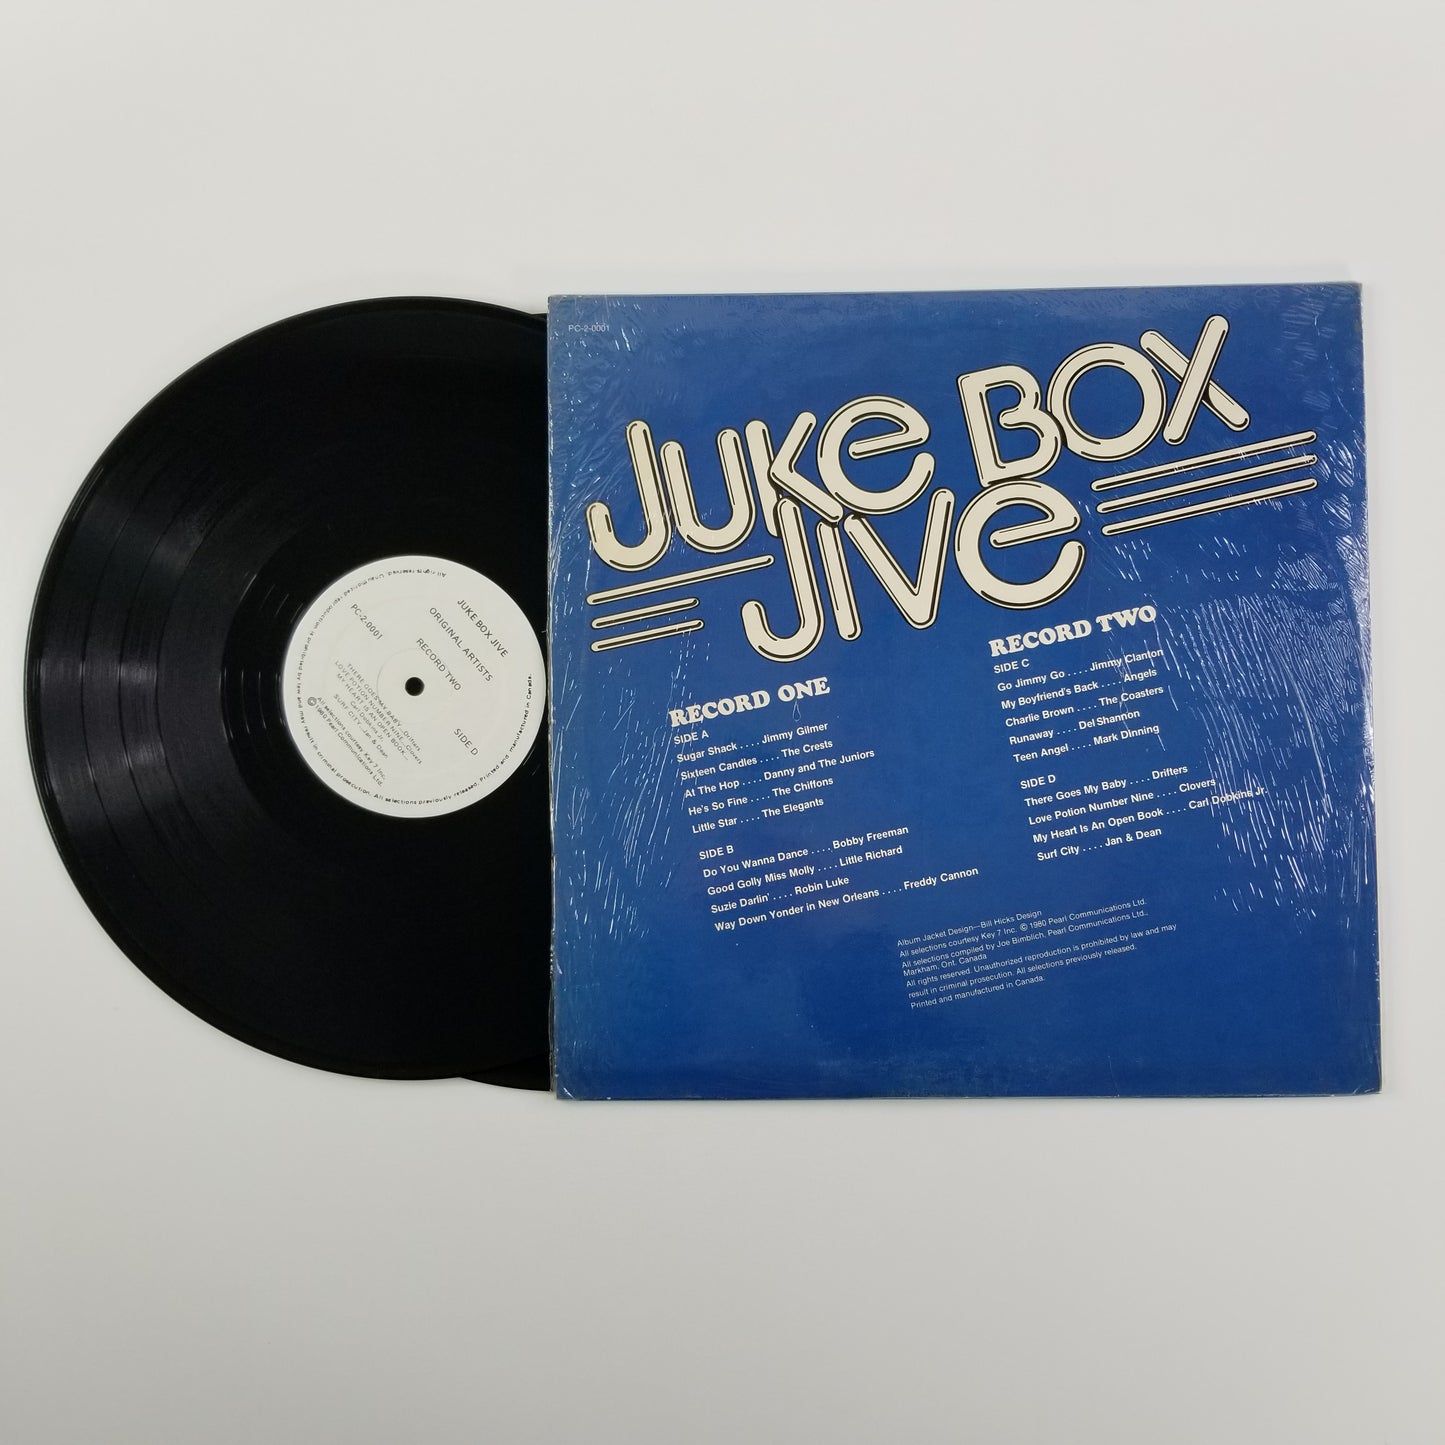 Original Artists - Juke Box Jive (1980, 2x LP)